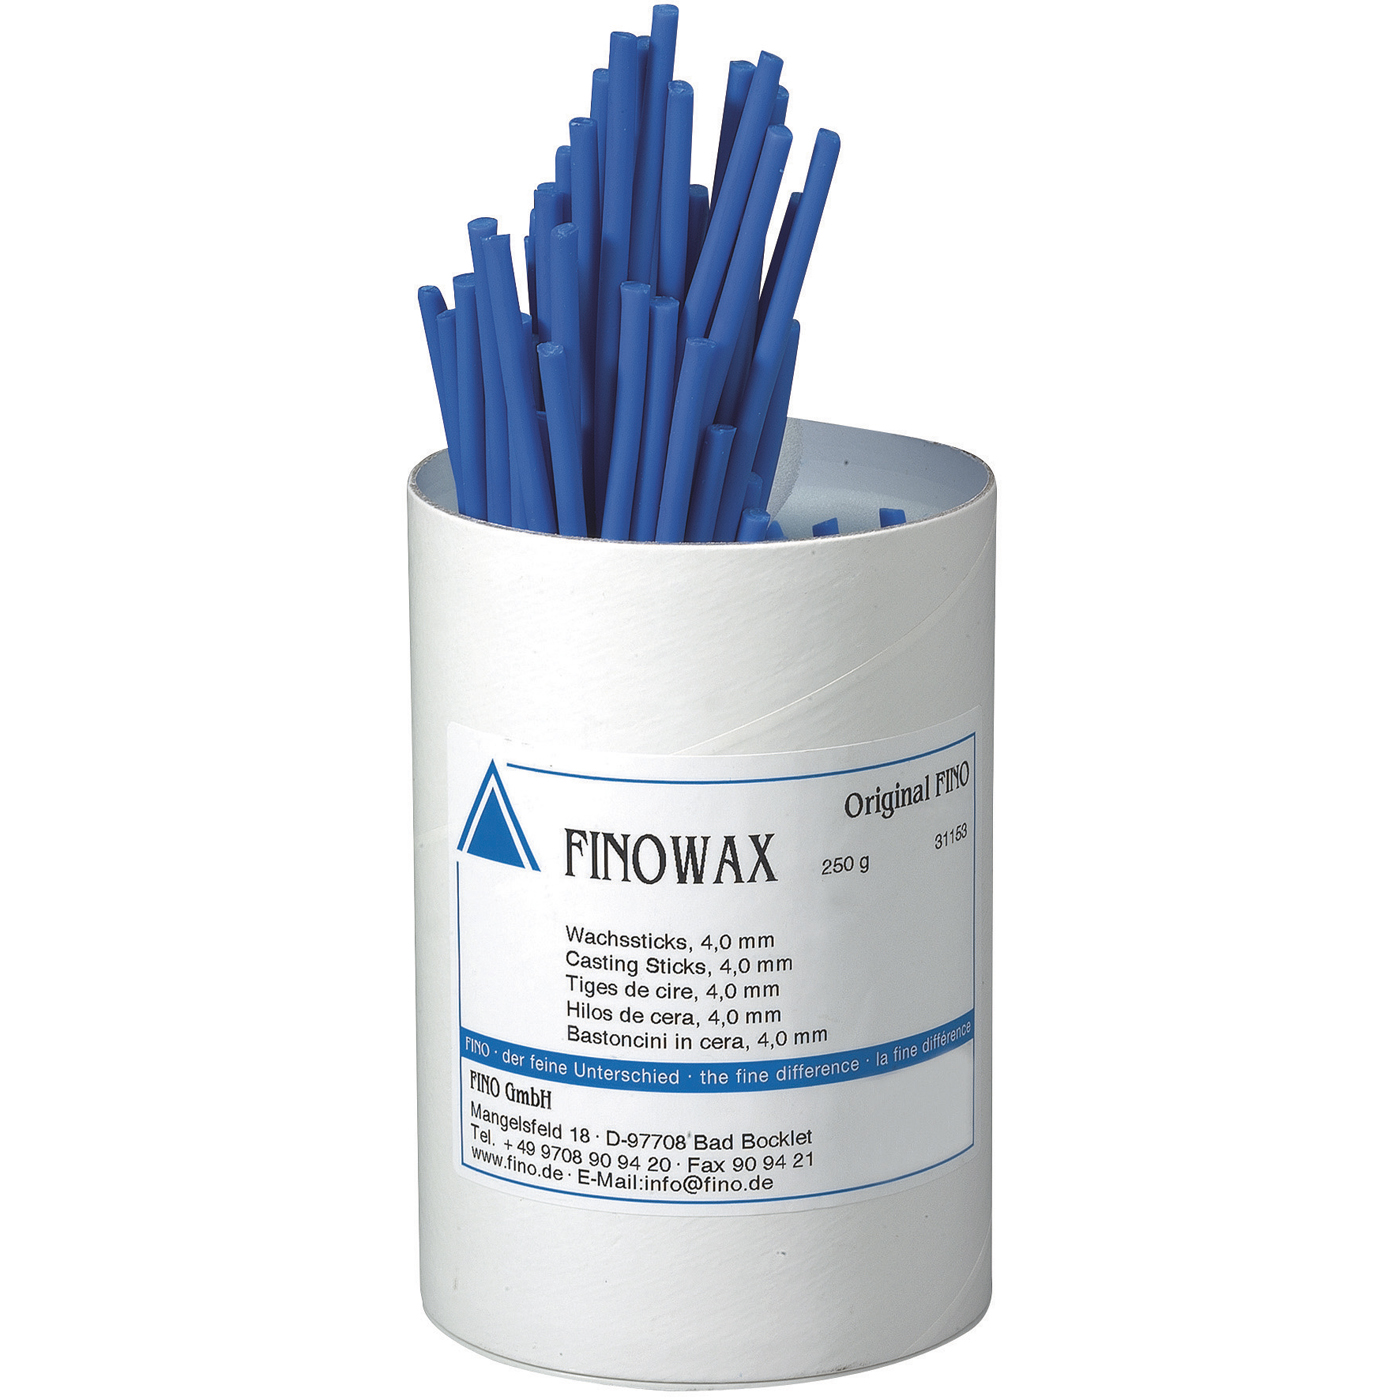 FINOWAX Wachssticks, ø 4,0 mm, blau - 250 g